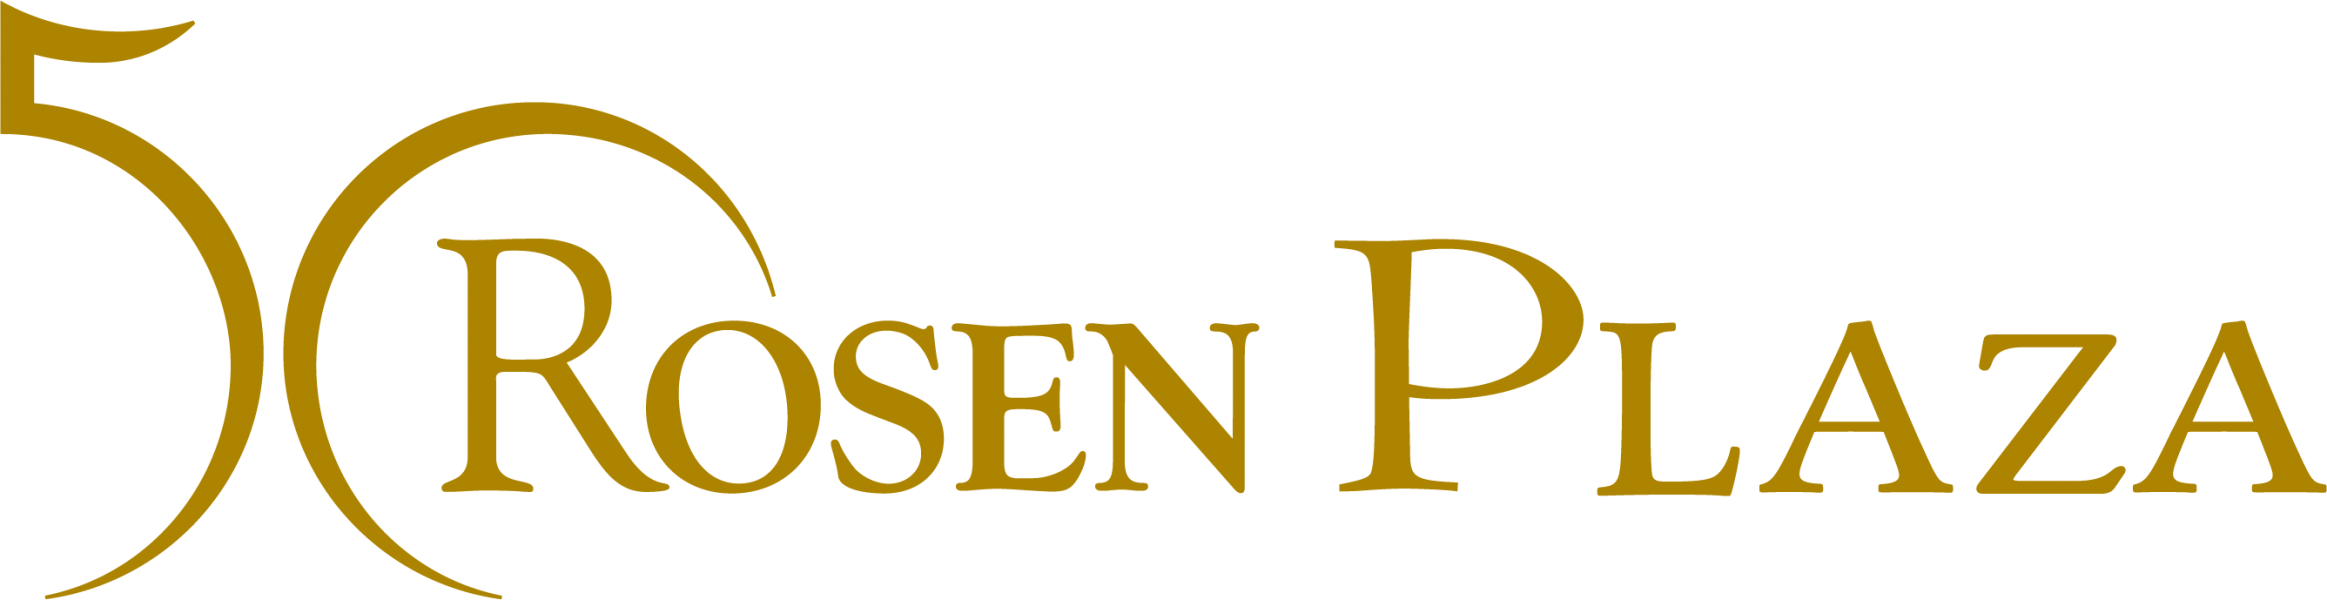 Rosen Plaza - 50th Anniversary Logo - Corp Gold - No Orlando